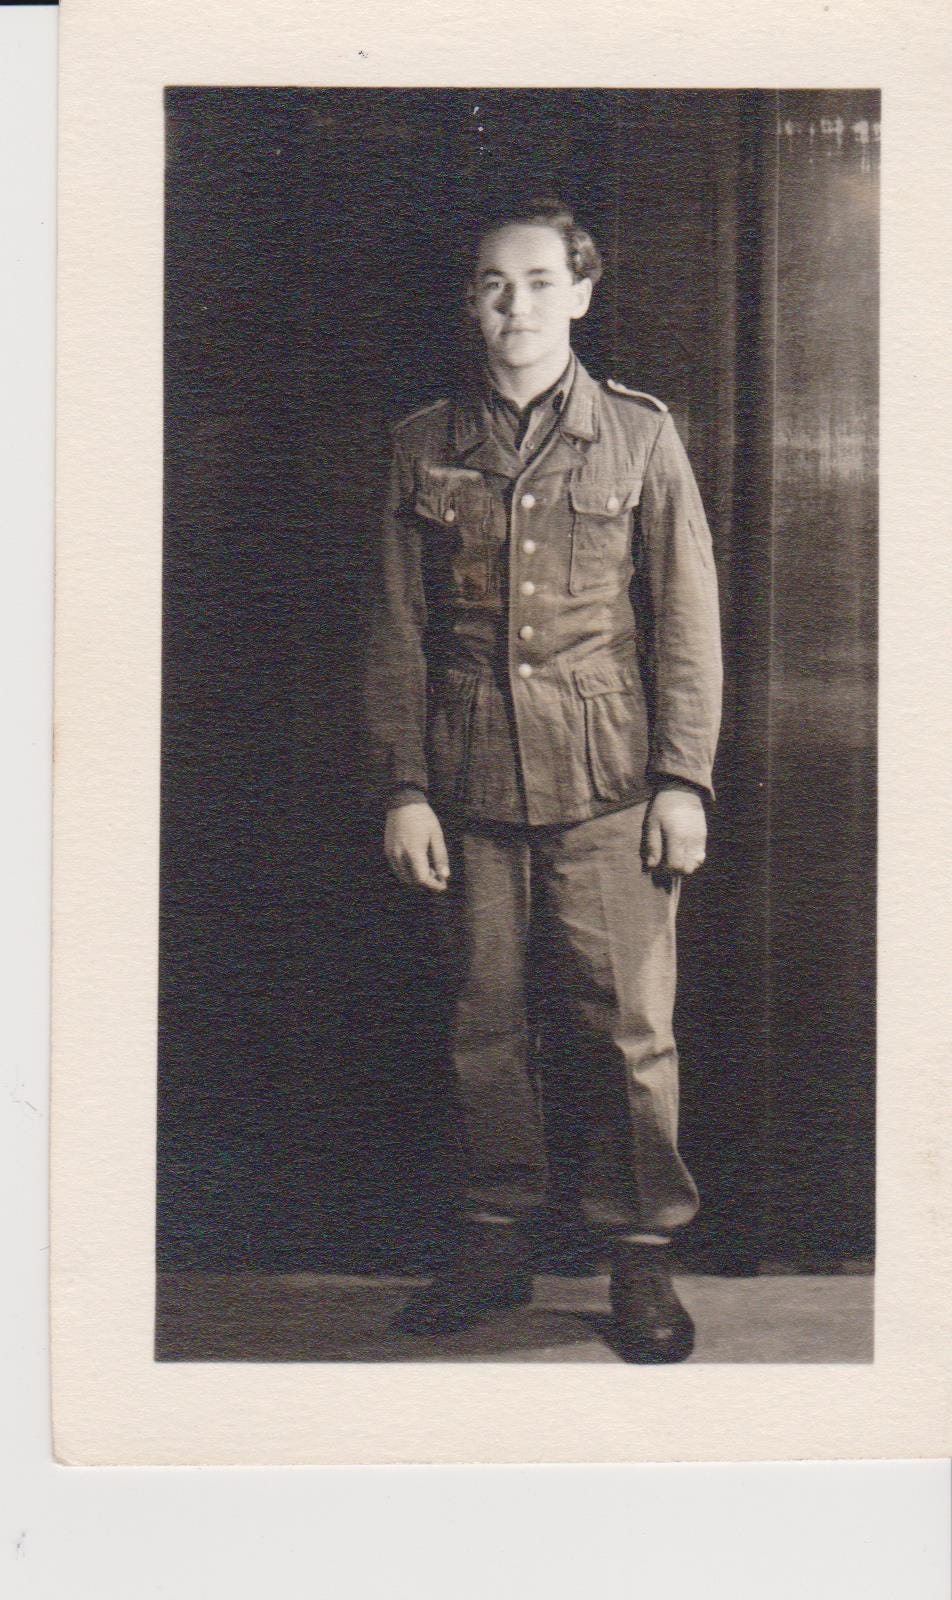 A photo of Kurt Pechmann when he was a German POW in Camp Hartford in 1945.